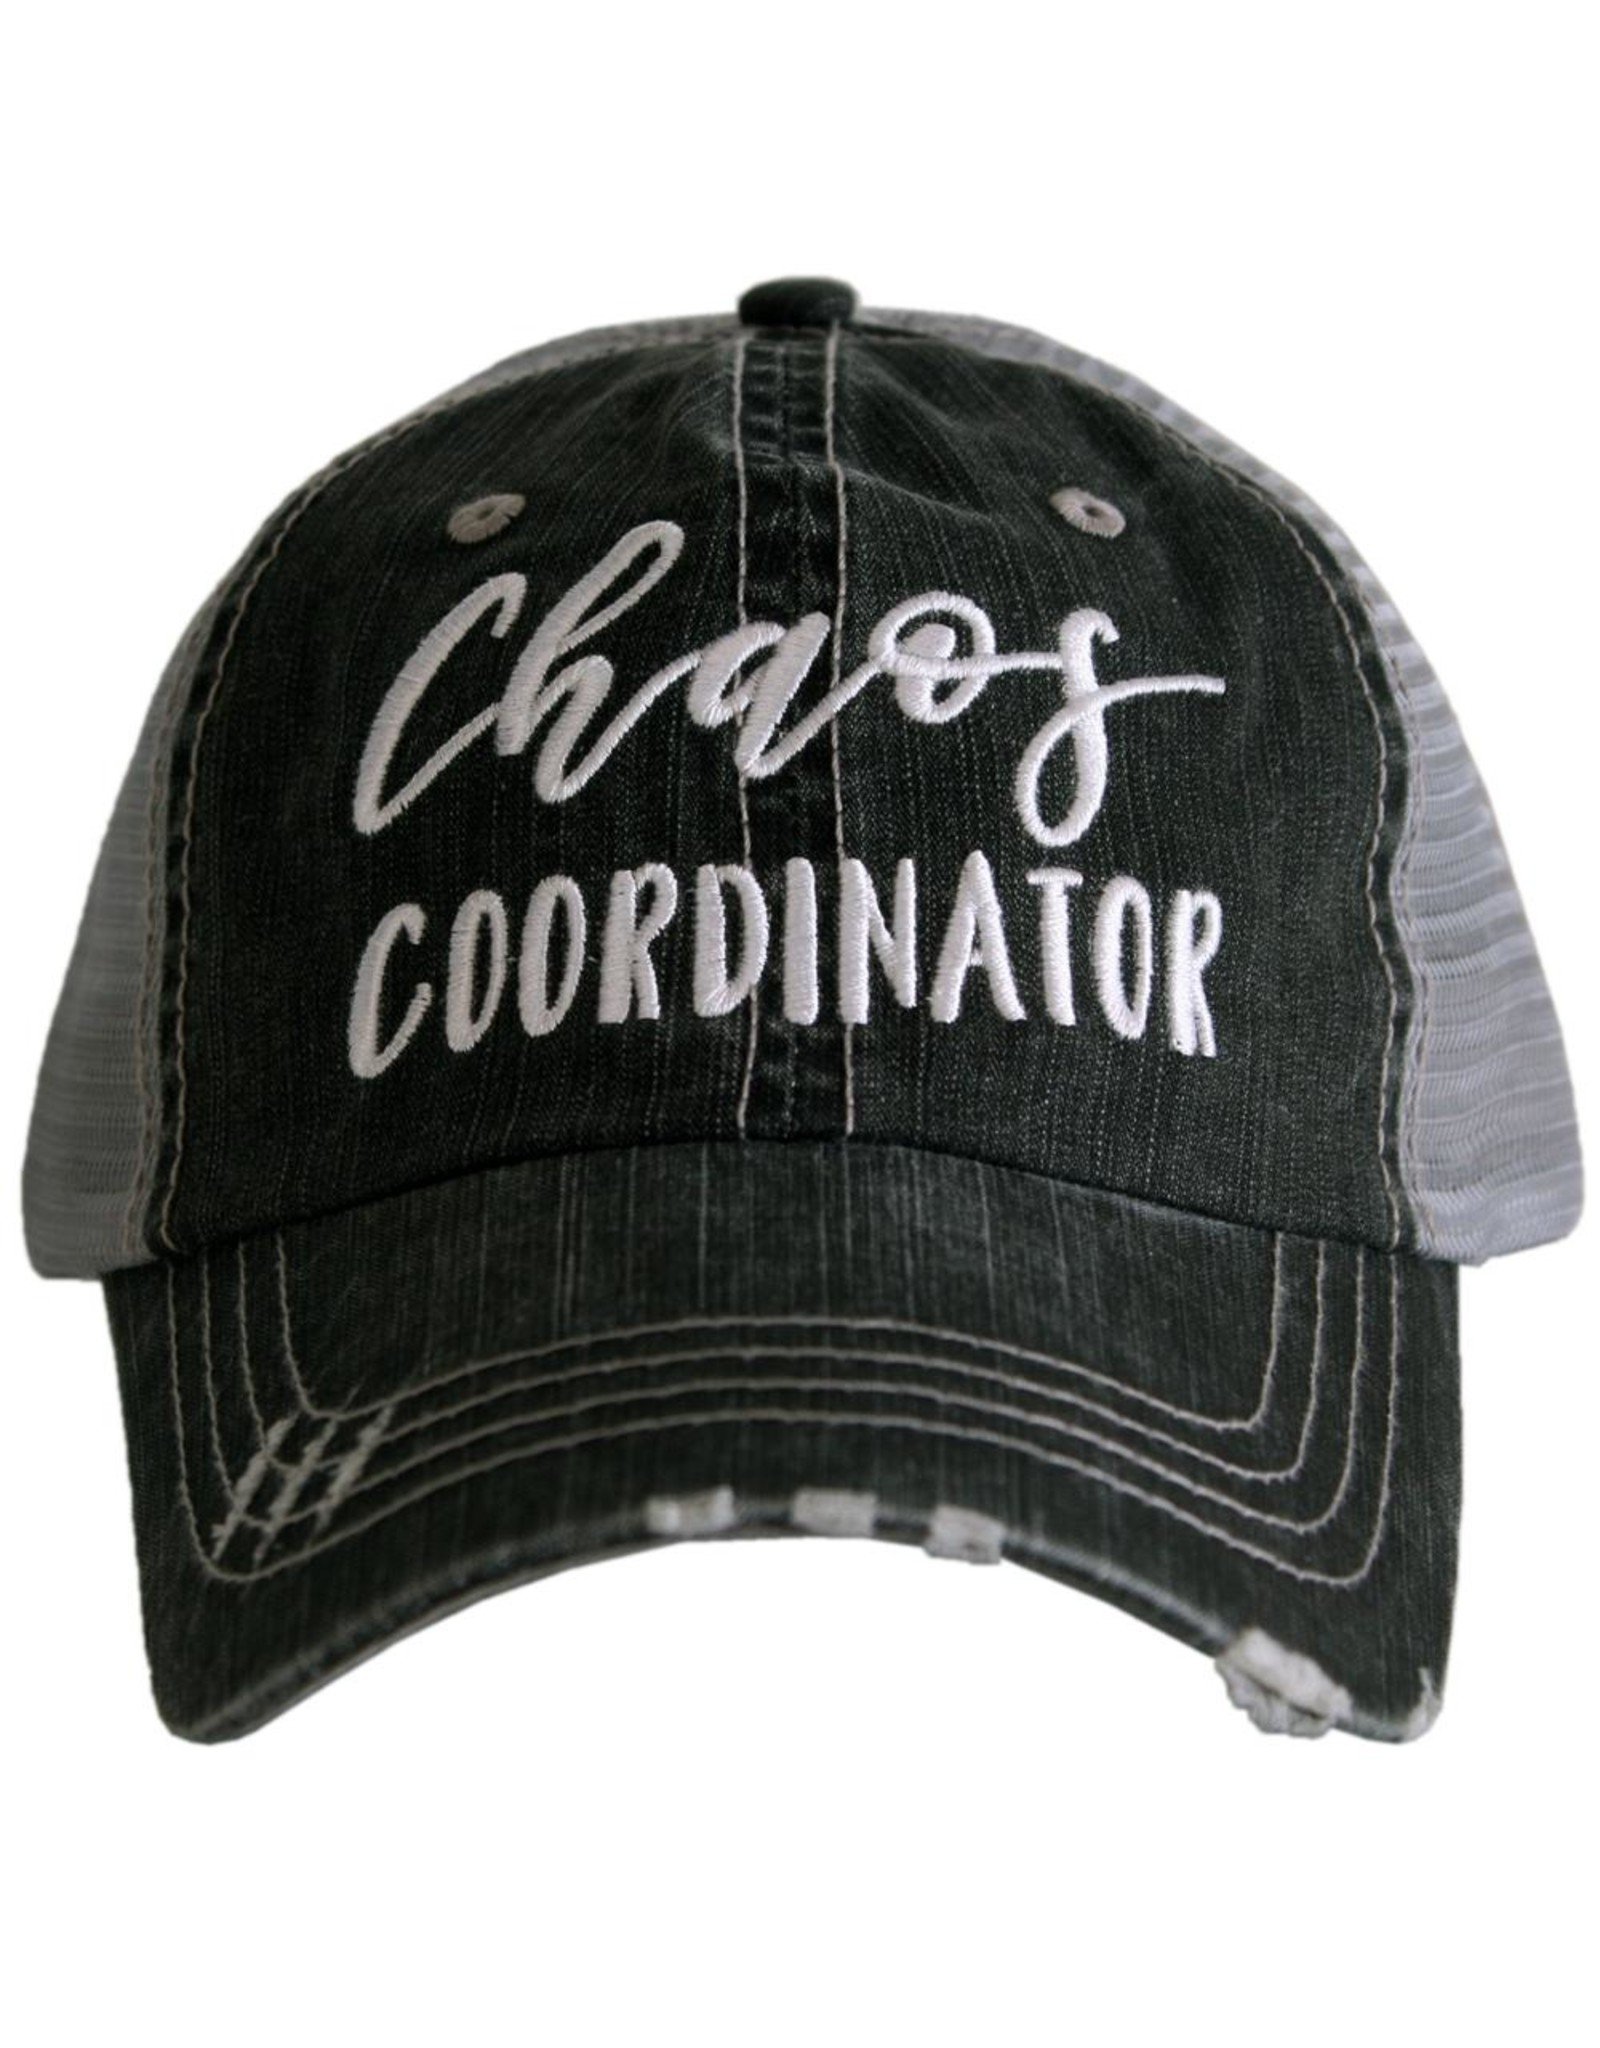 Chaos Coordinator-Trucker Hat Gray